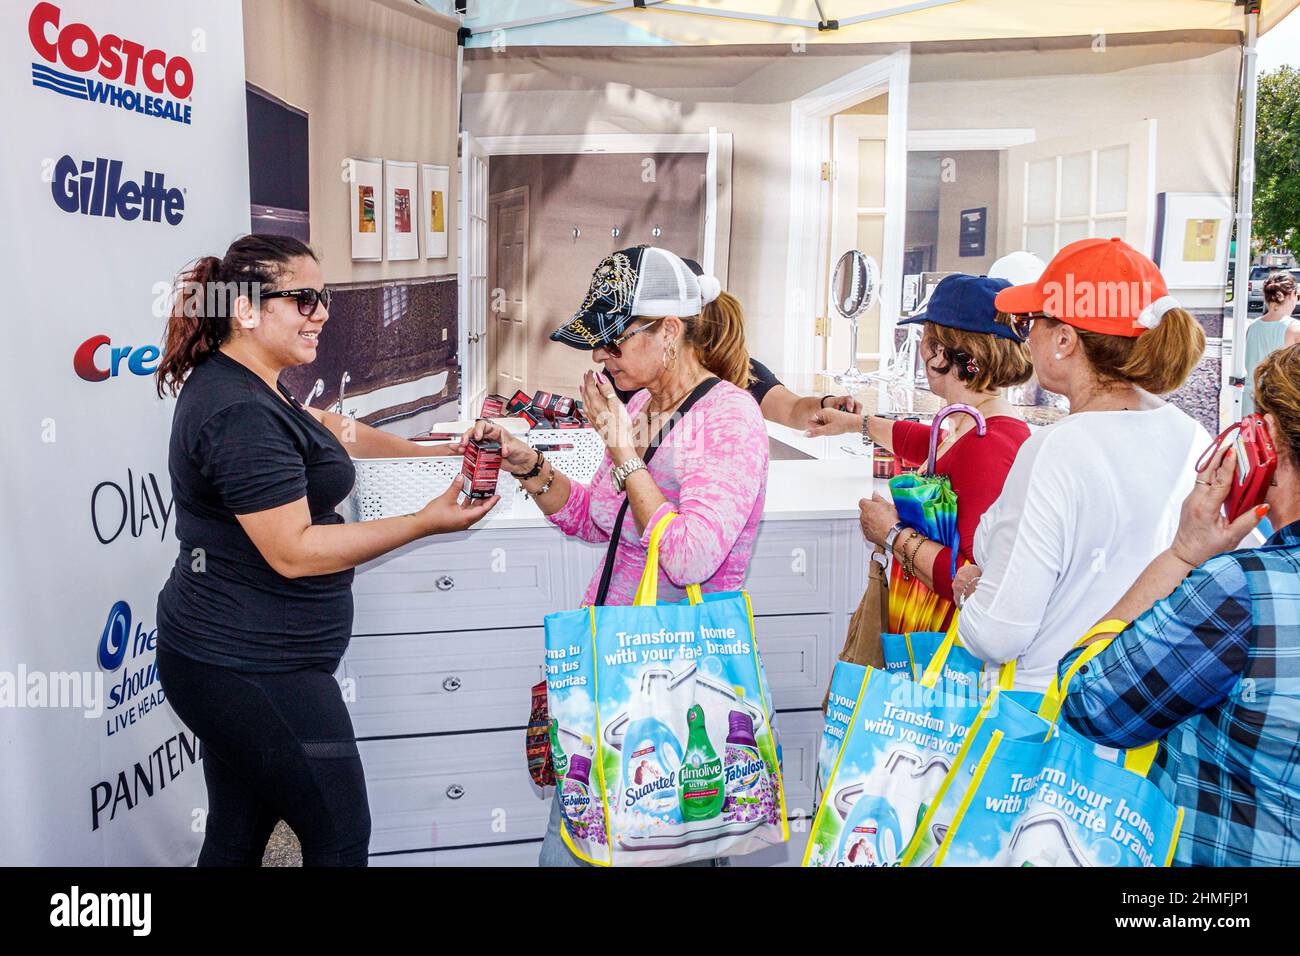 Miami Florida,Little Havana,Calle Ocho,annual street festival,Hispanic woman women offering,receiving,free product sample Costco Wholesale promotion Stock Photo